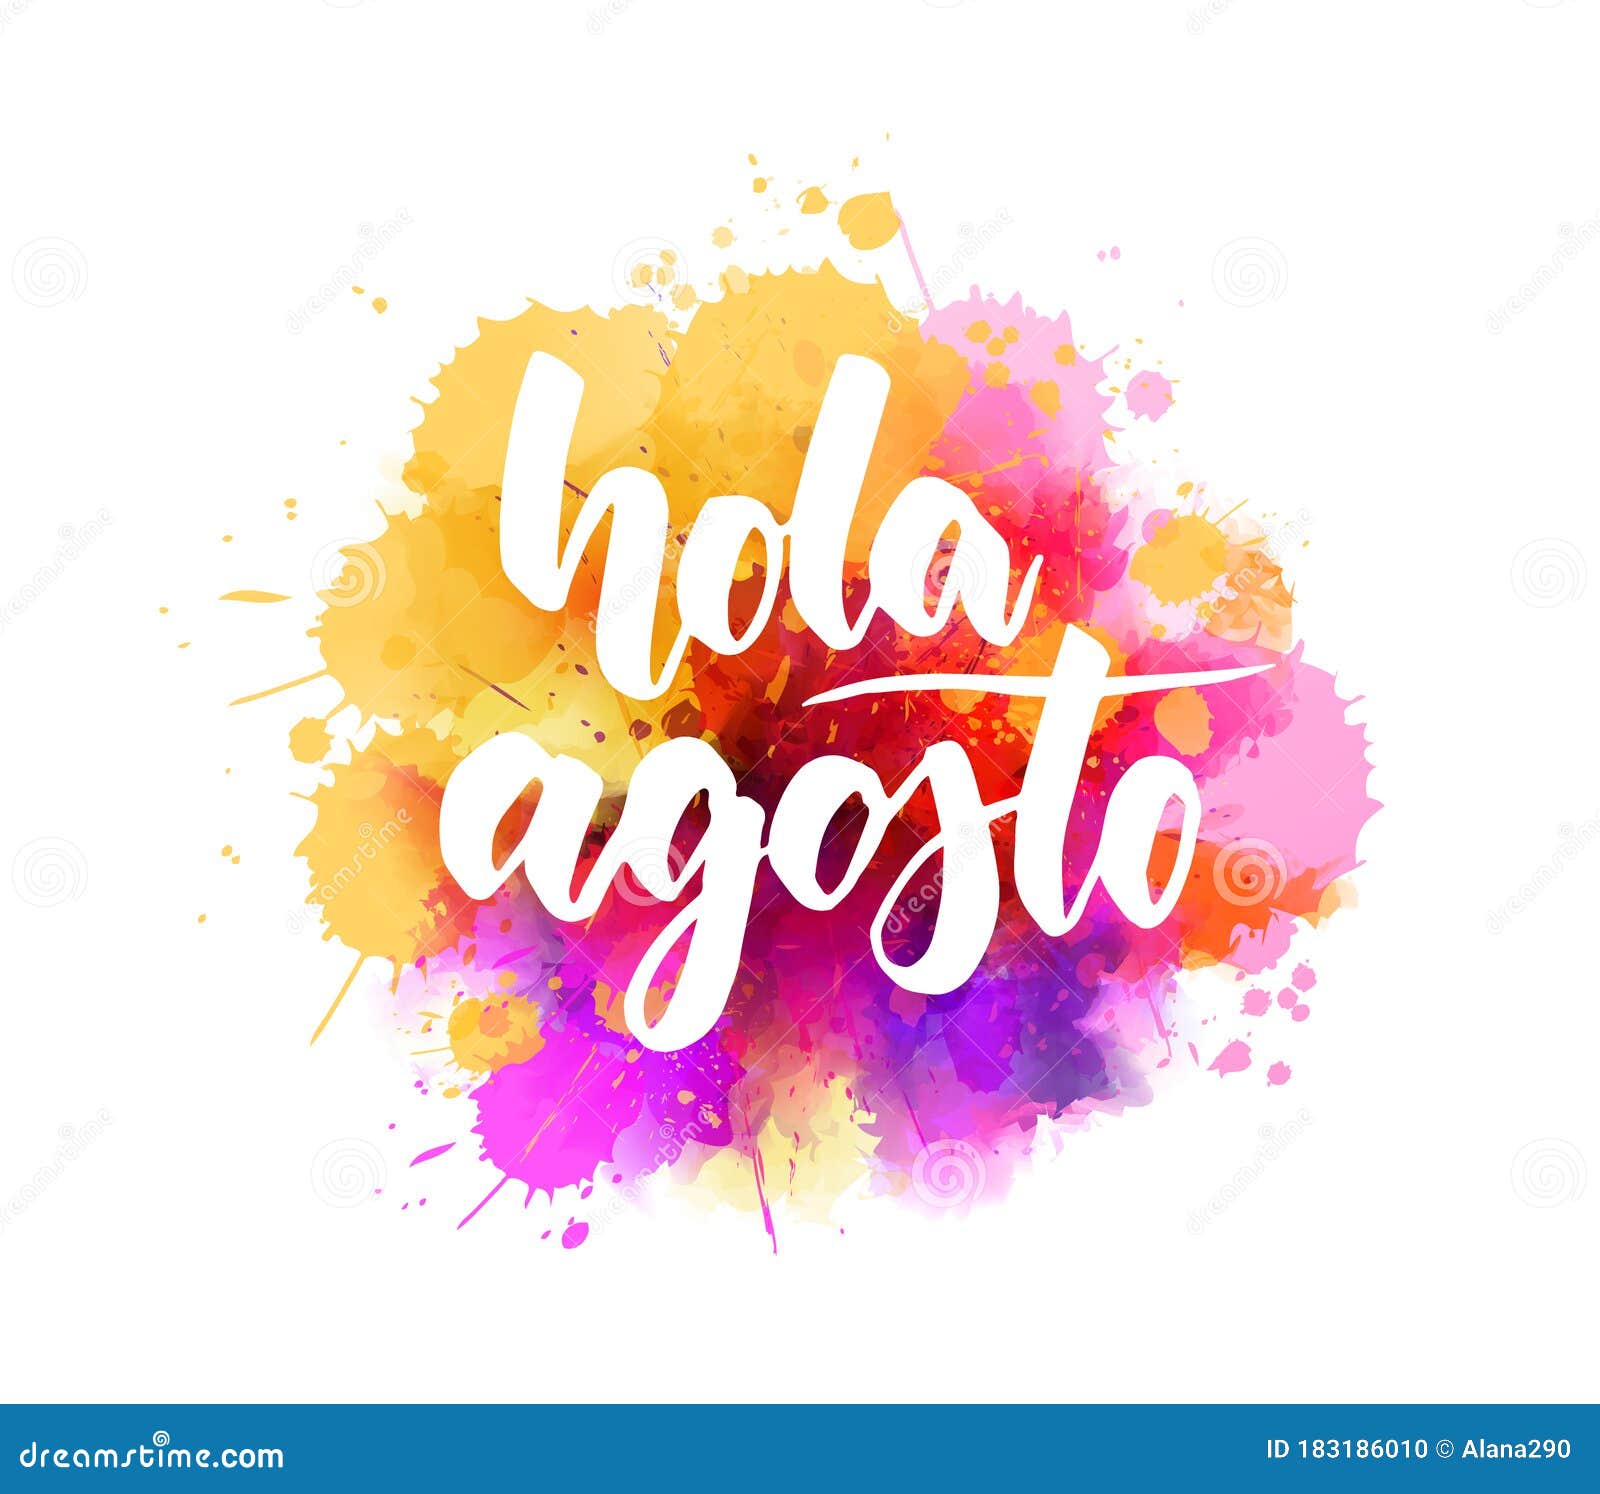 hola agosto - lettering on watercolor splash background